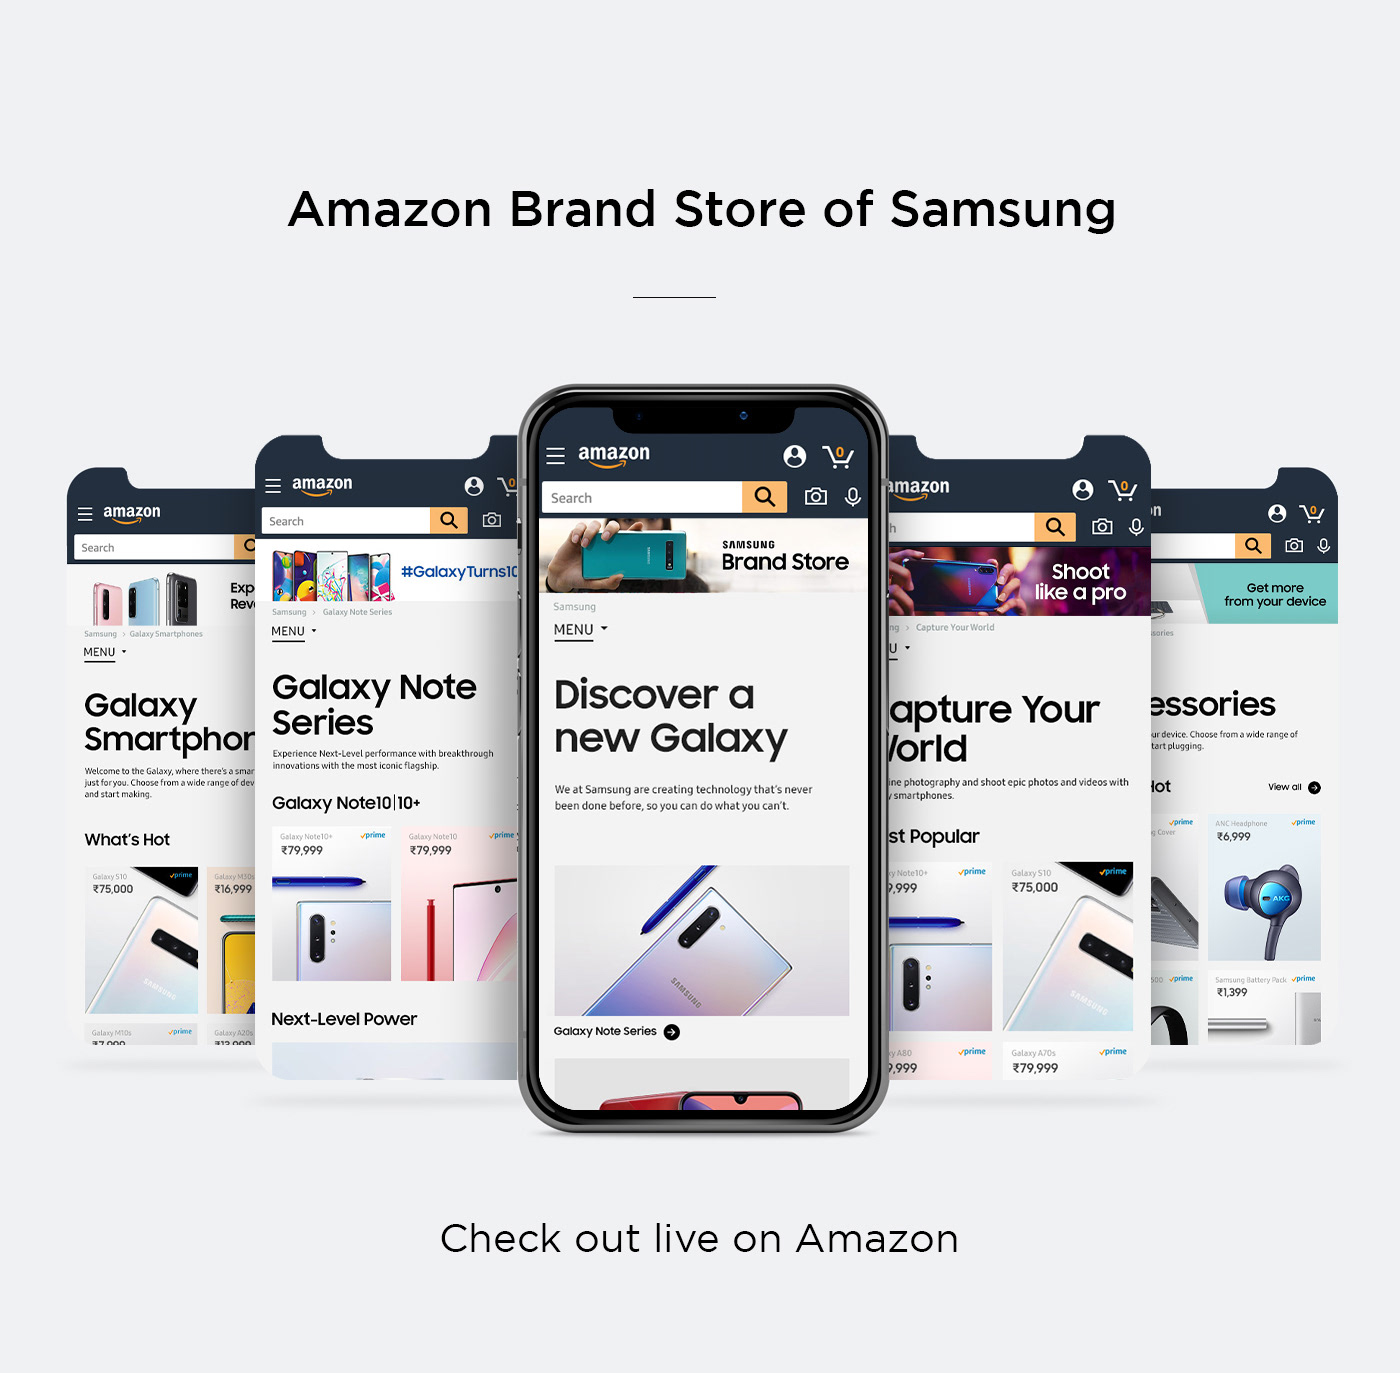 Amazon brand store Samsung Samsung brand Store smartphones UI UI/UX